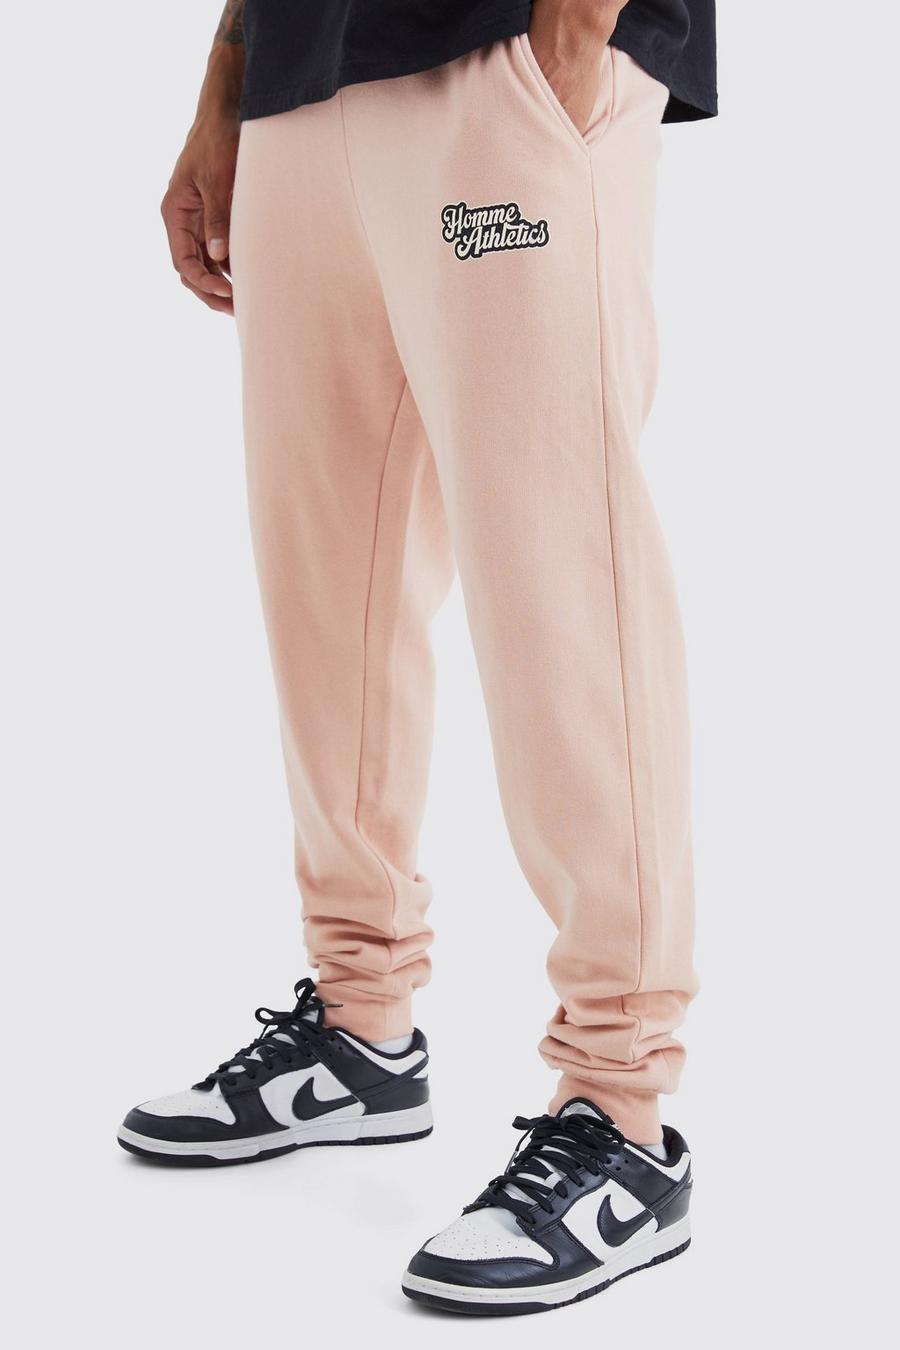 Pantaloni tuta oversize con grafica stile Varsity, Dusty pink